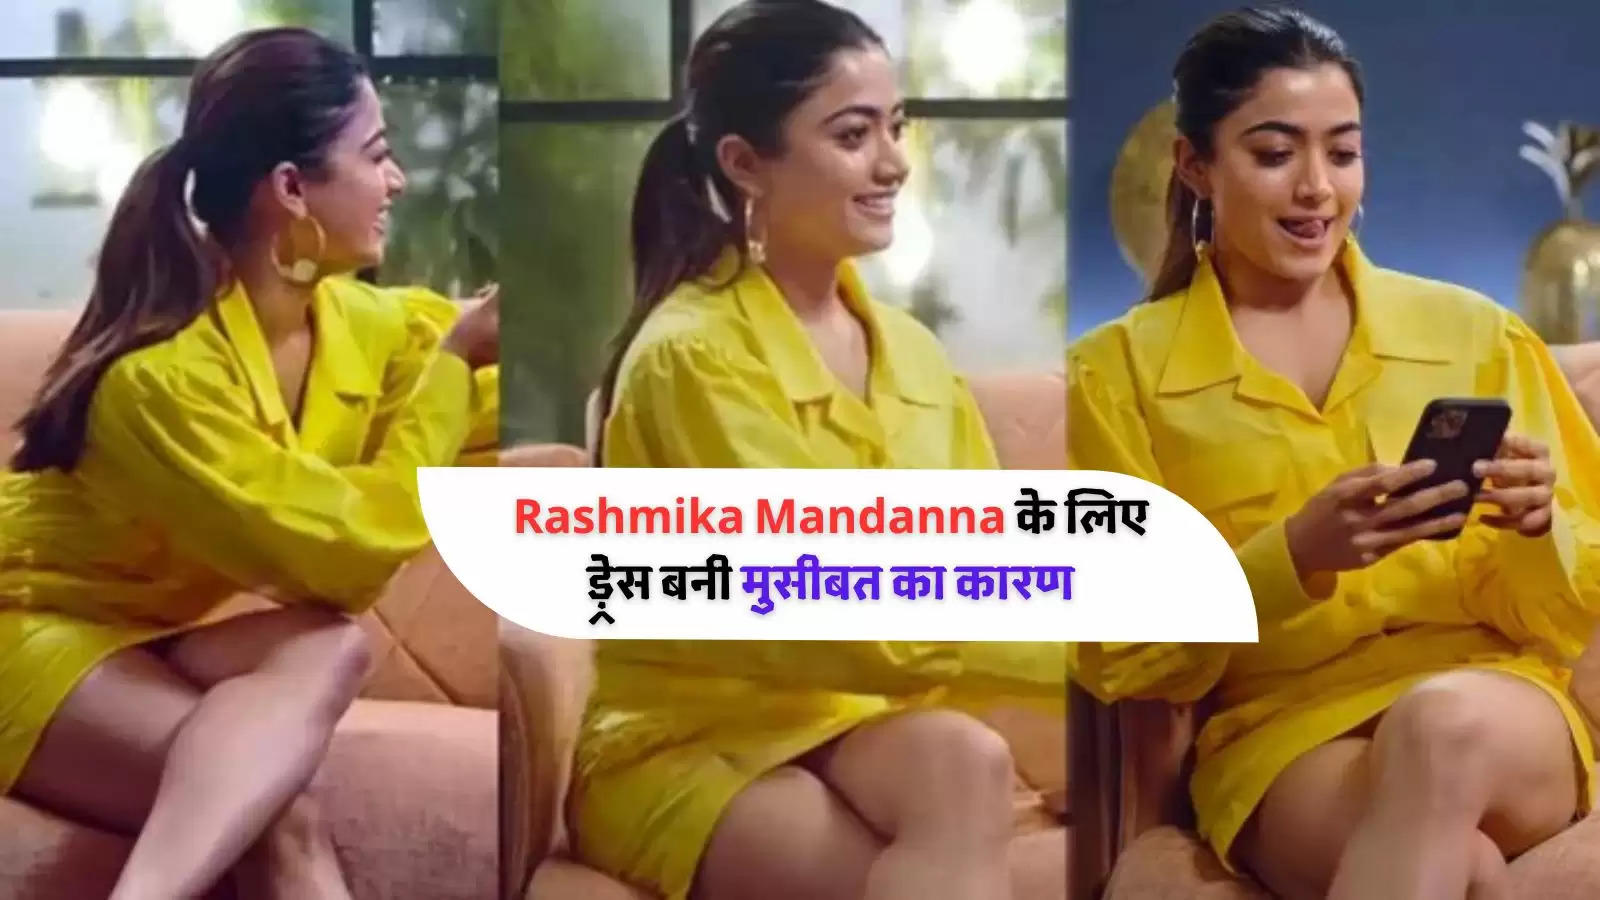 Rashmika Mandanna Oops moment (1)